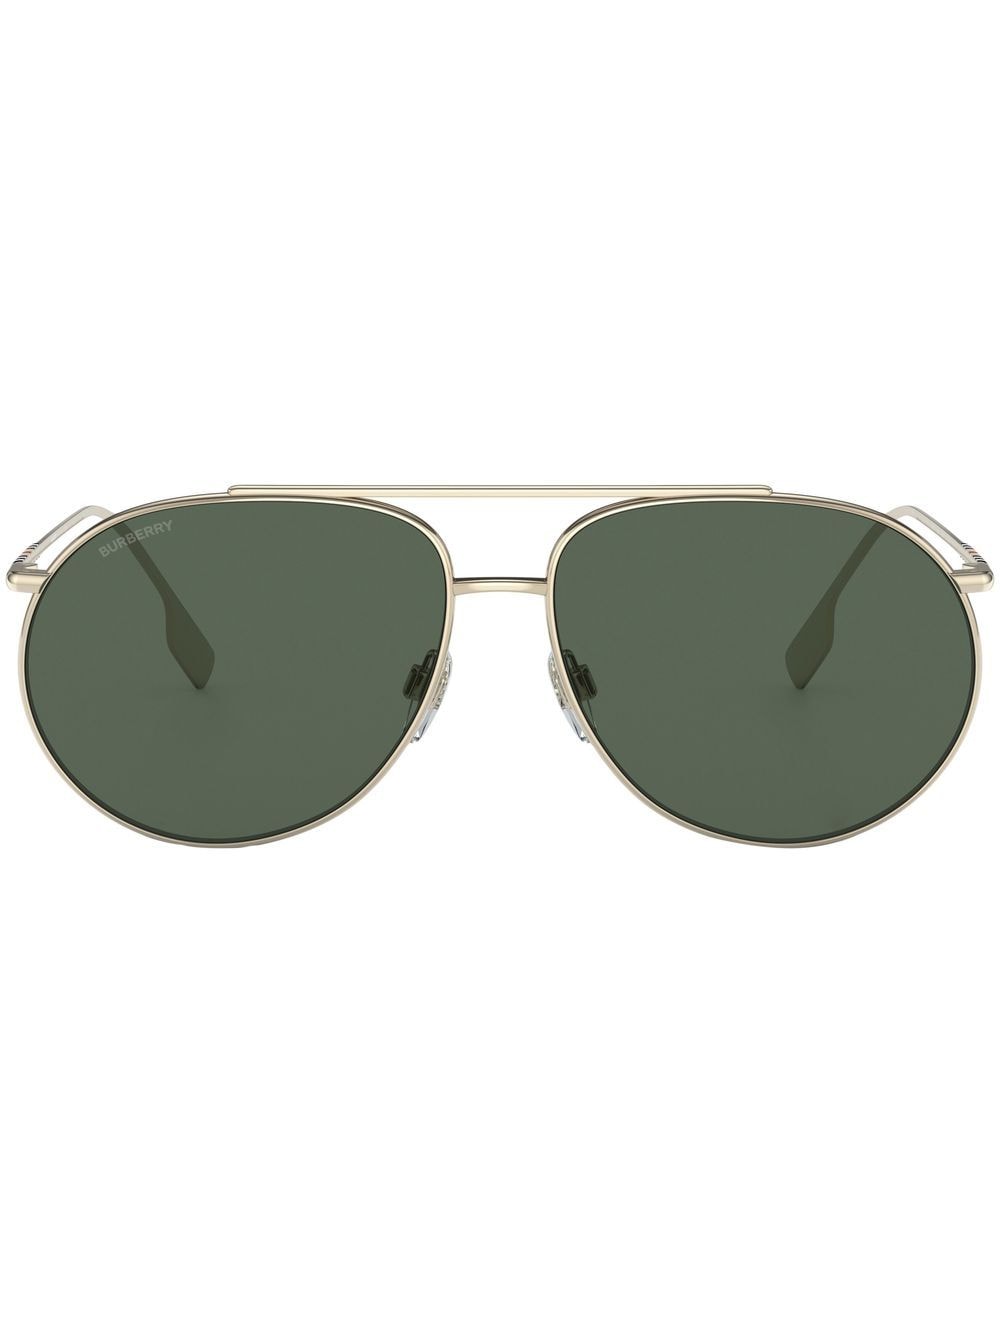 Burberry Eyewear Alice Pilot-frame Sunglasses In Gold